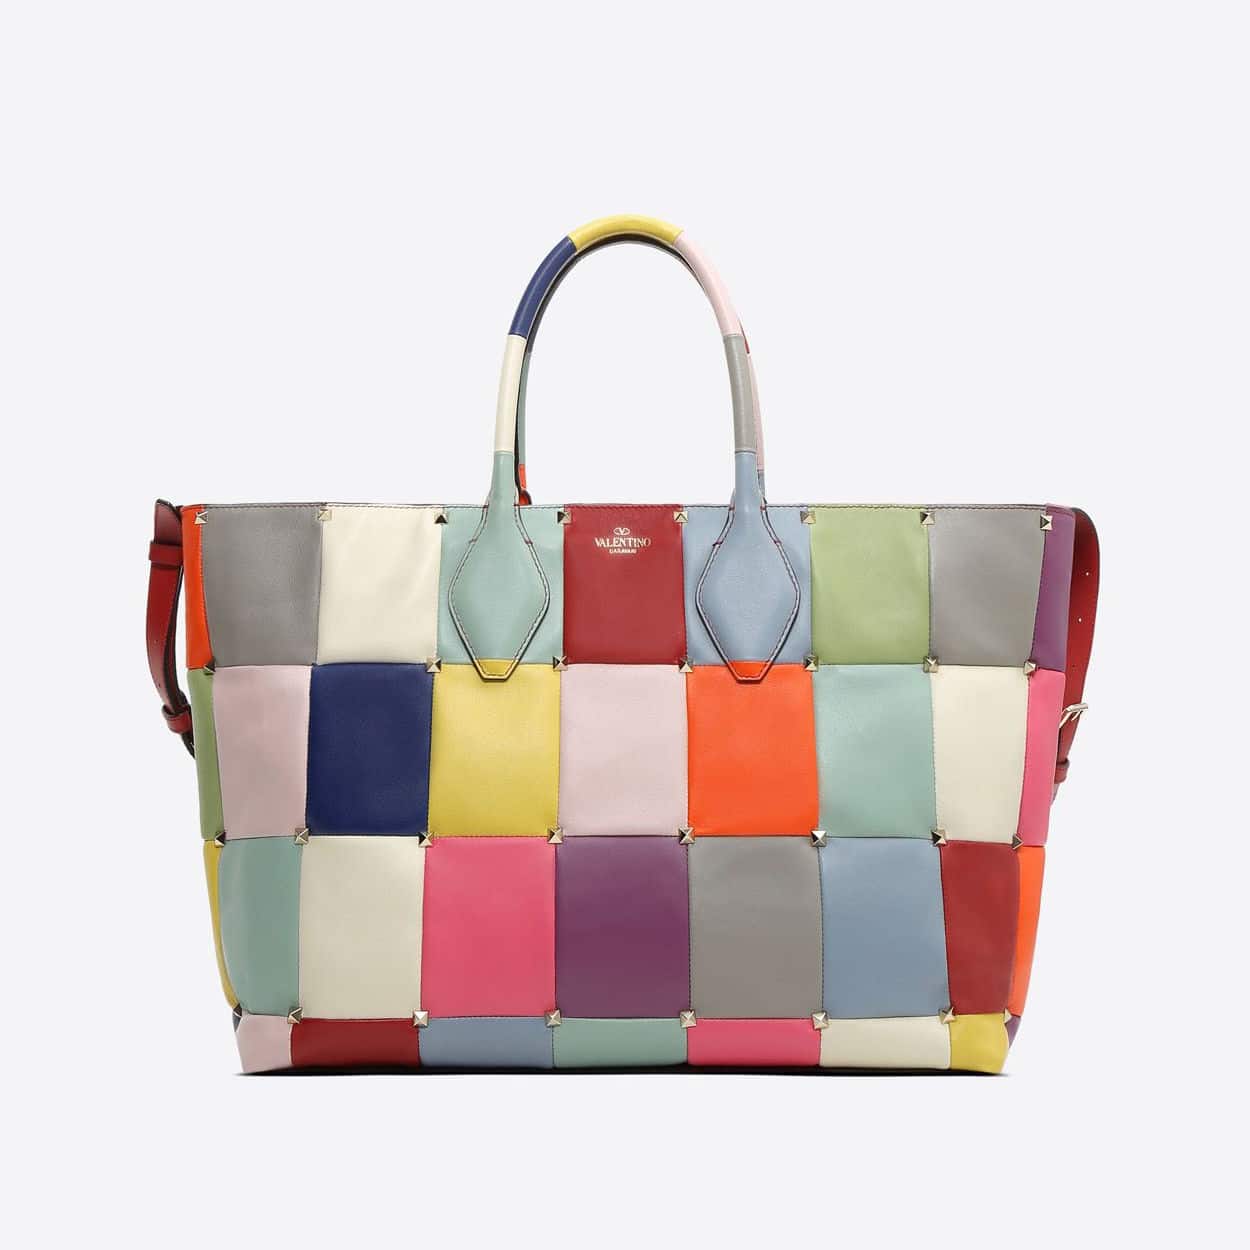 Valentino Bags by Mario Mia Signature Cadillac Rose One Size: Handbags:  Amazon.com